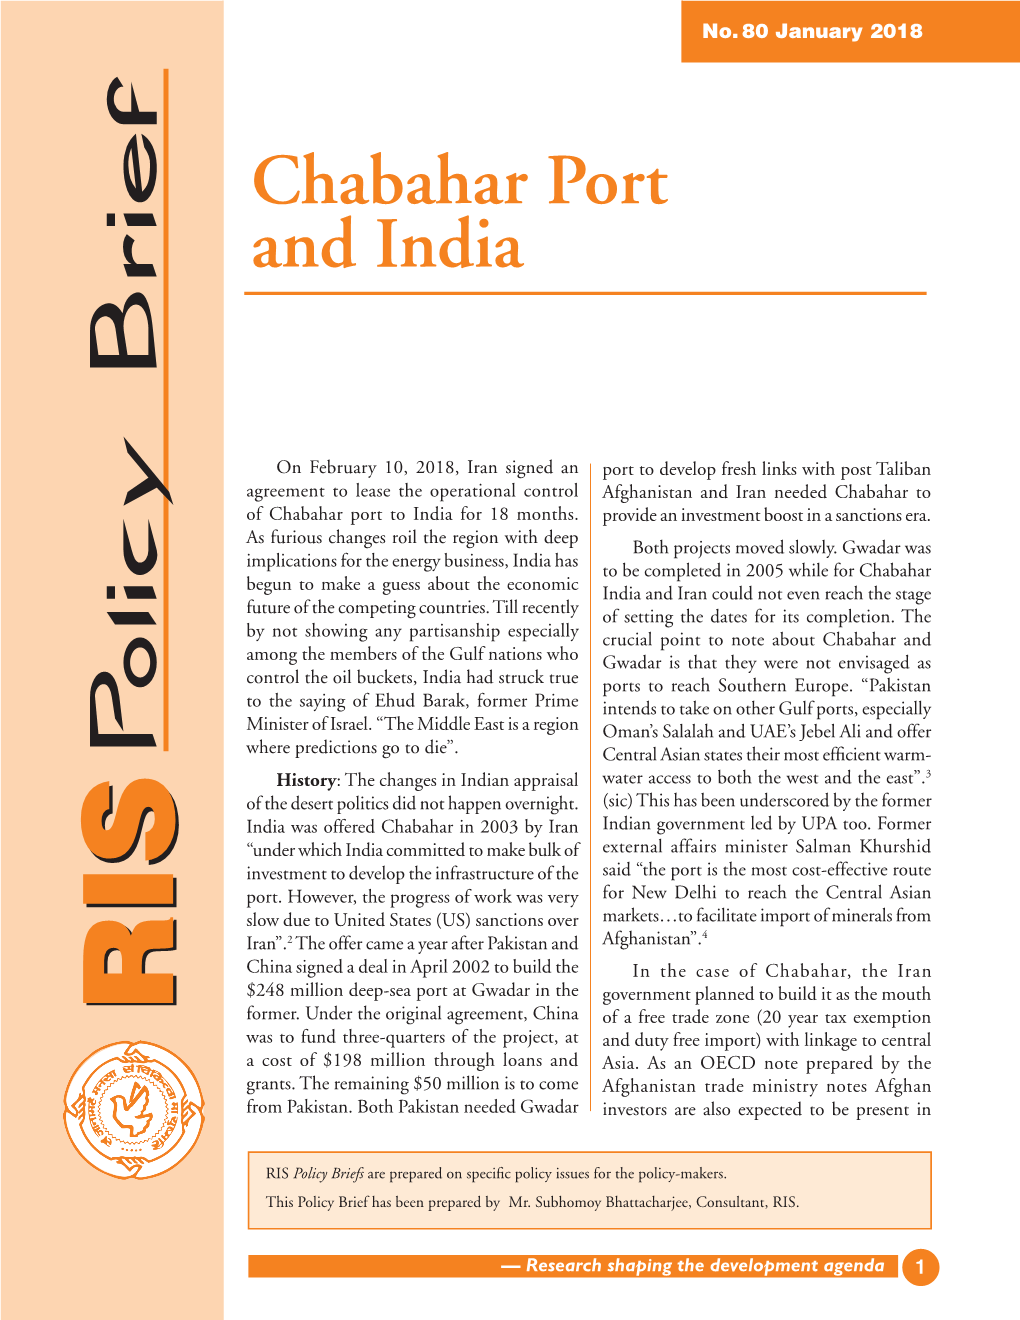 Chabahar Port and India